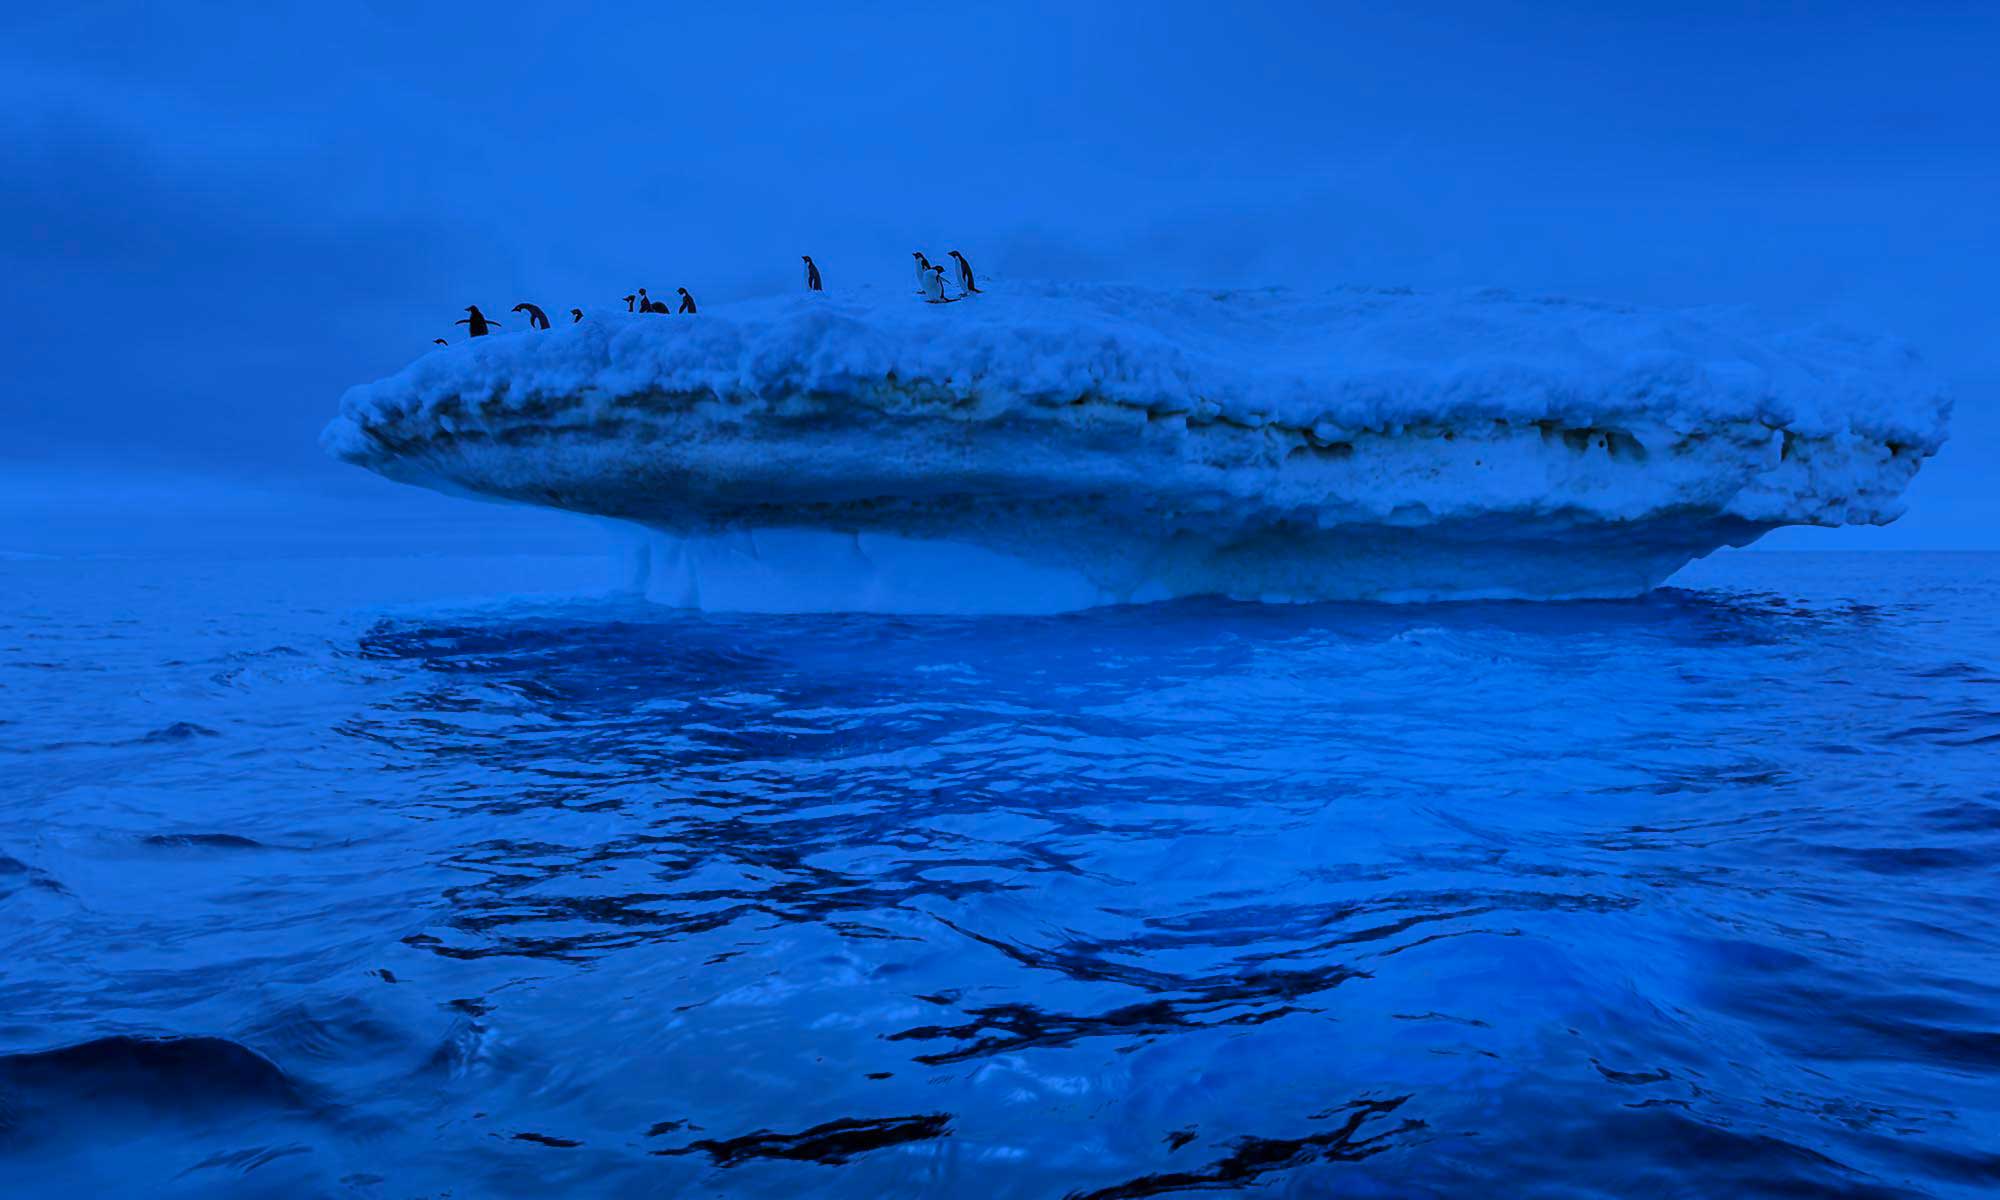 Penguins on an iceberg in Antarctica